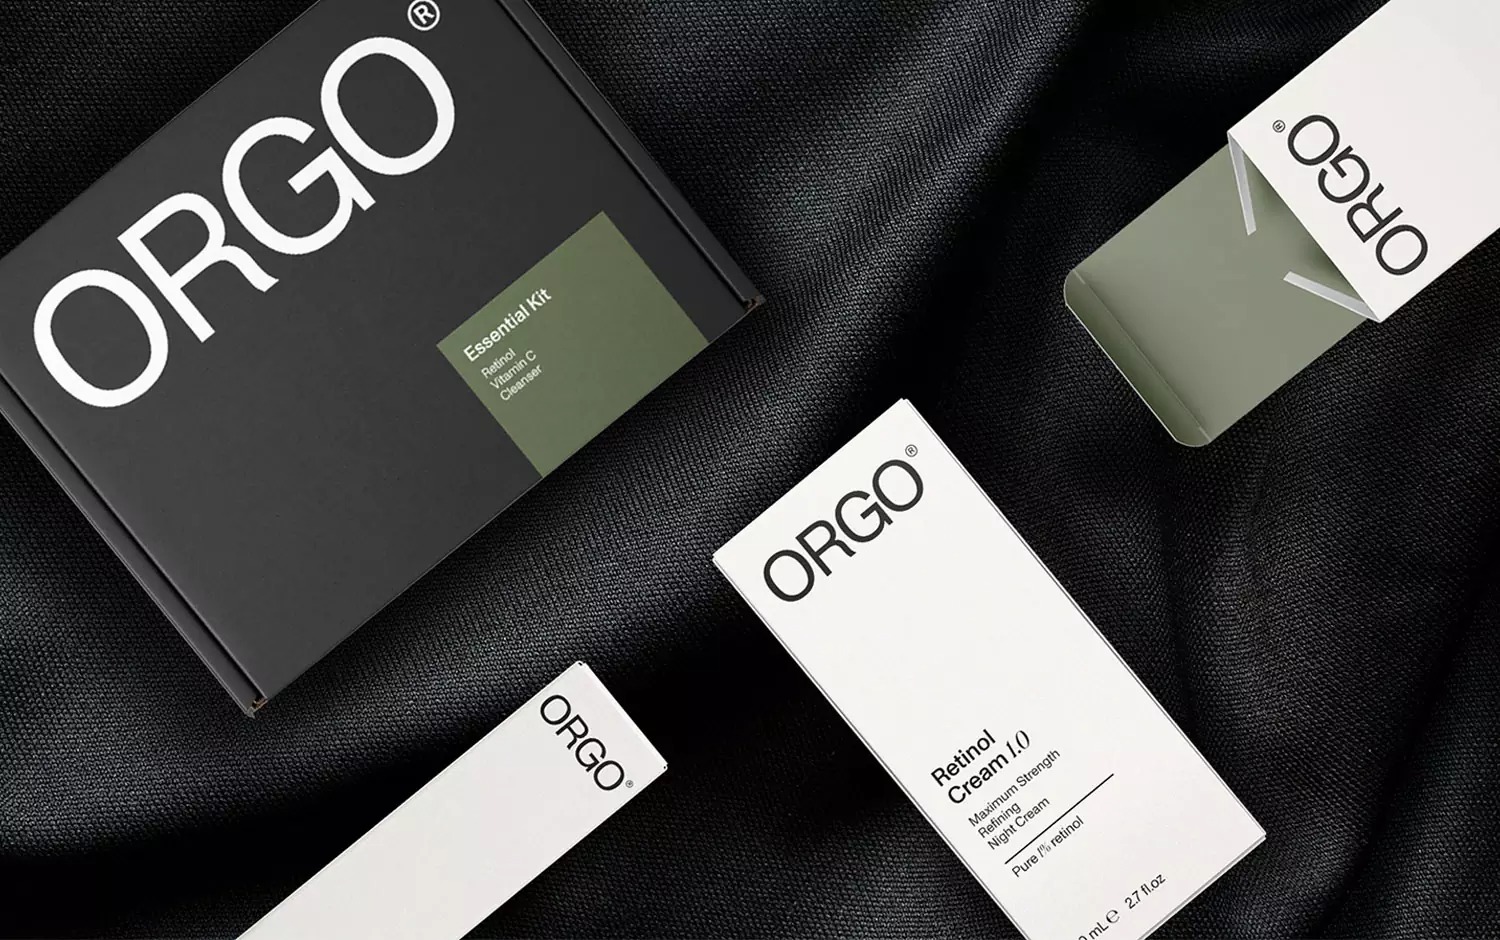 Orgo护肤品牌包装设计